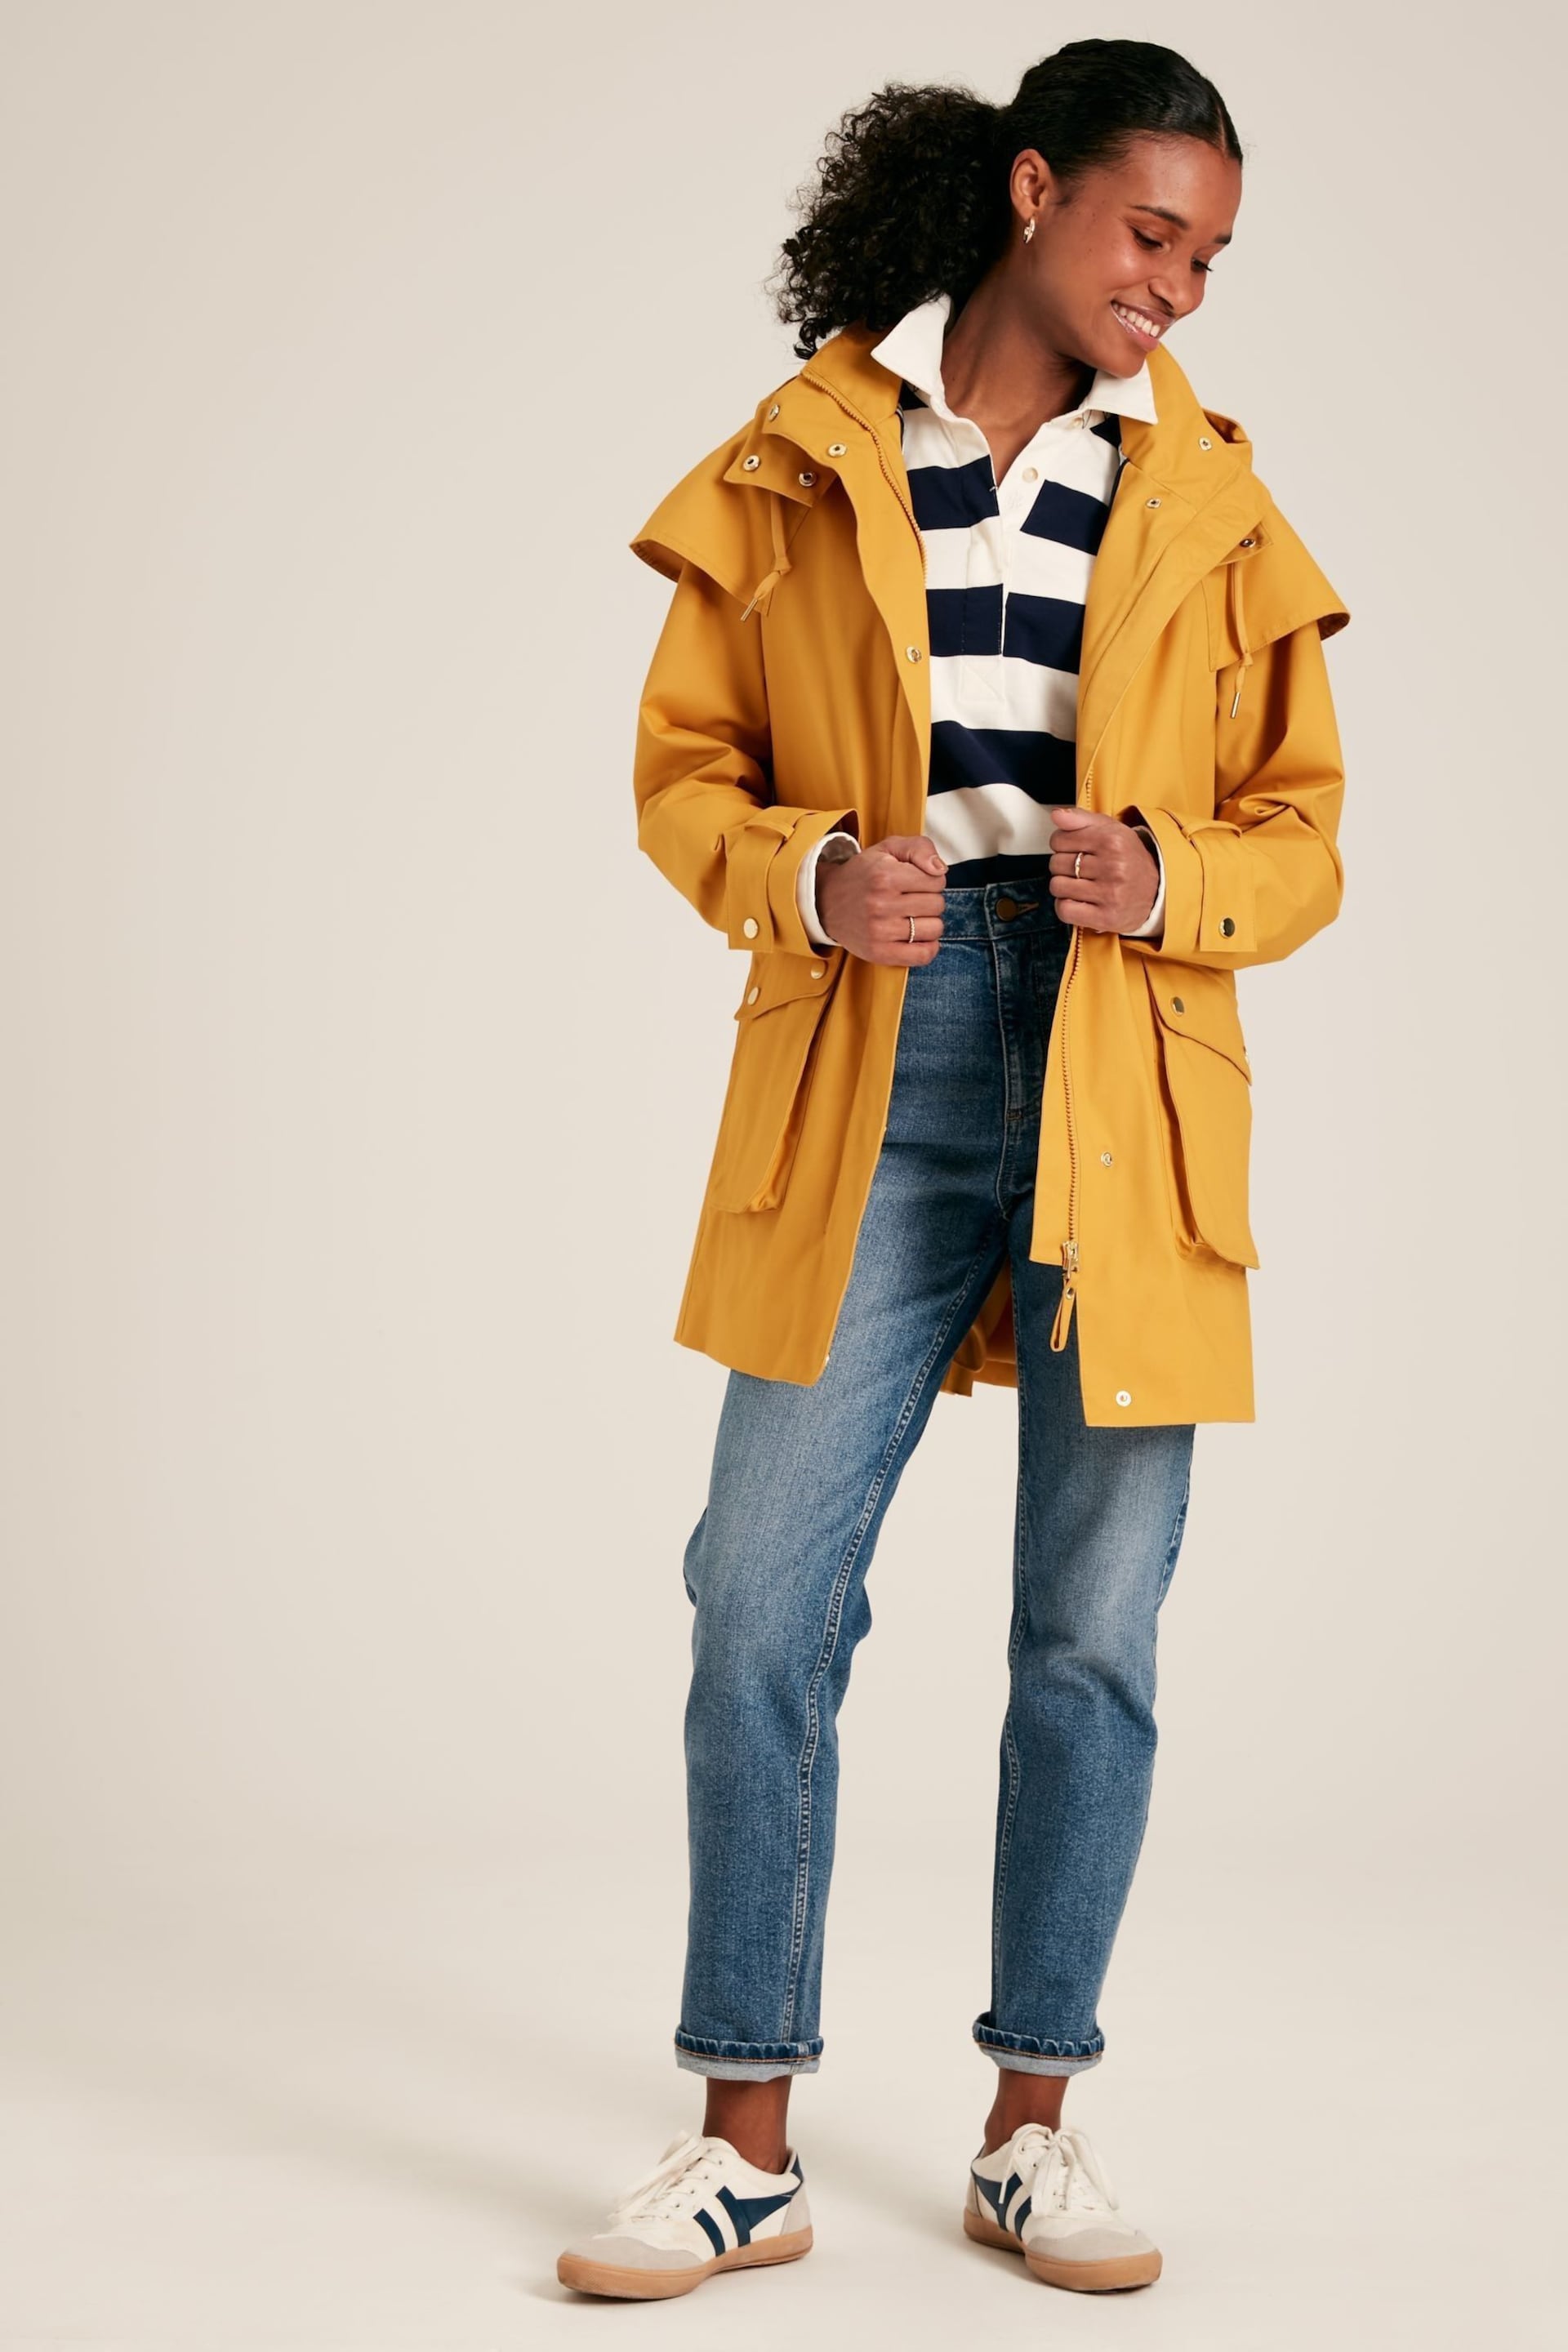 Joules Edinburgh Yellow Premium Waterproof Hooded Raincoat - Image 4 of 10